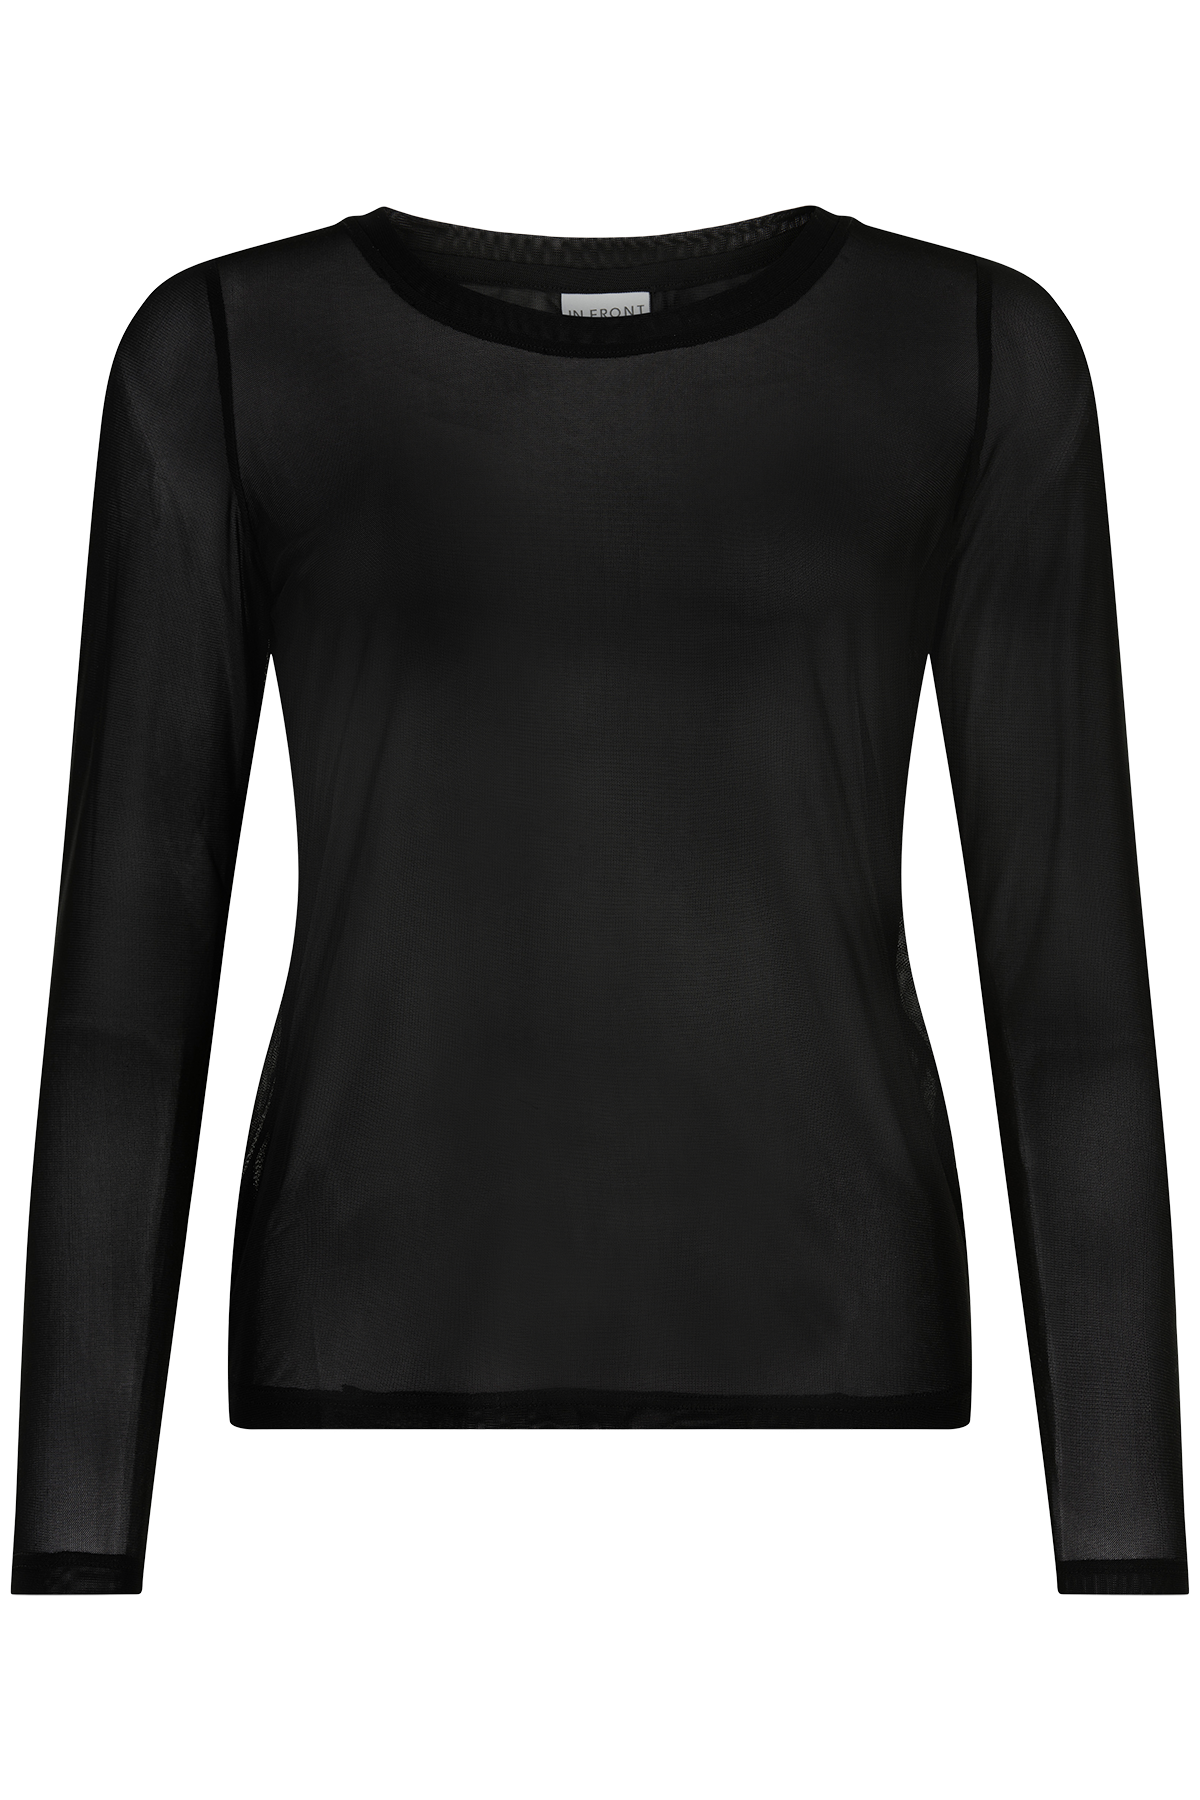 Se IN FRONT Gro Mesh T-shirt, Farve: Black, Størrelse: L, Dame hos Infront Women